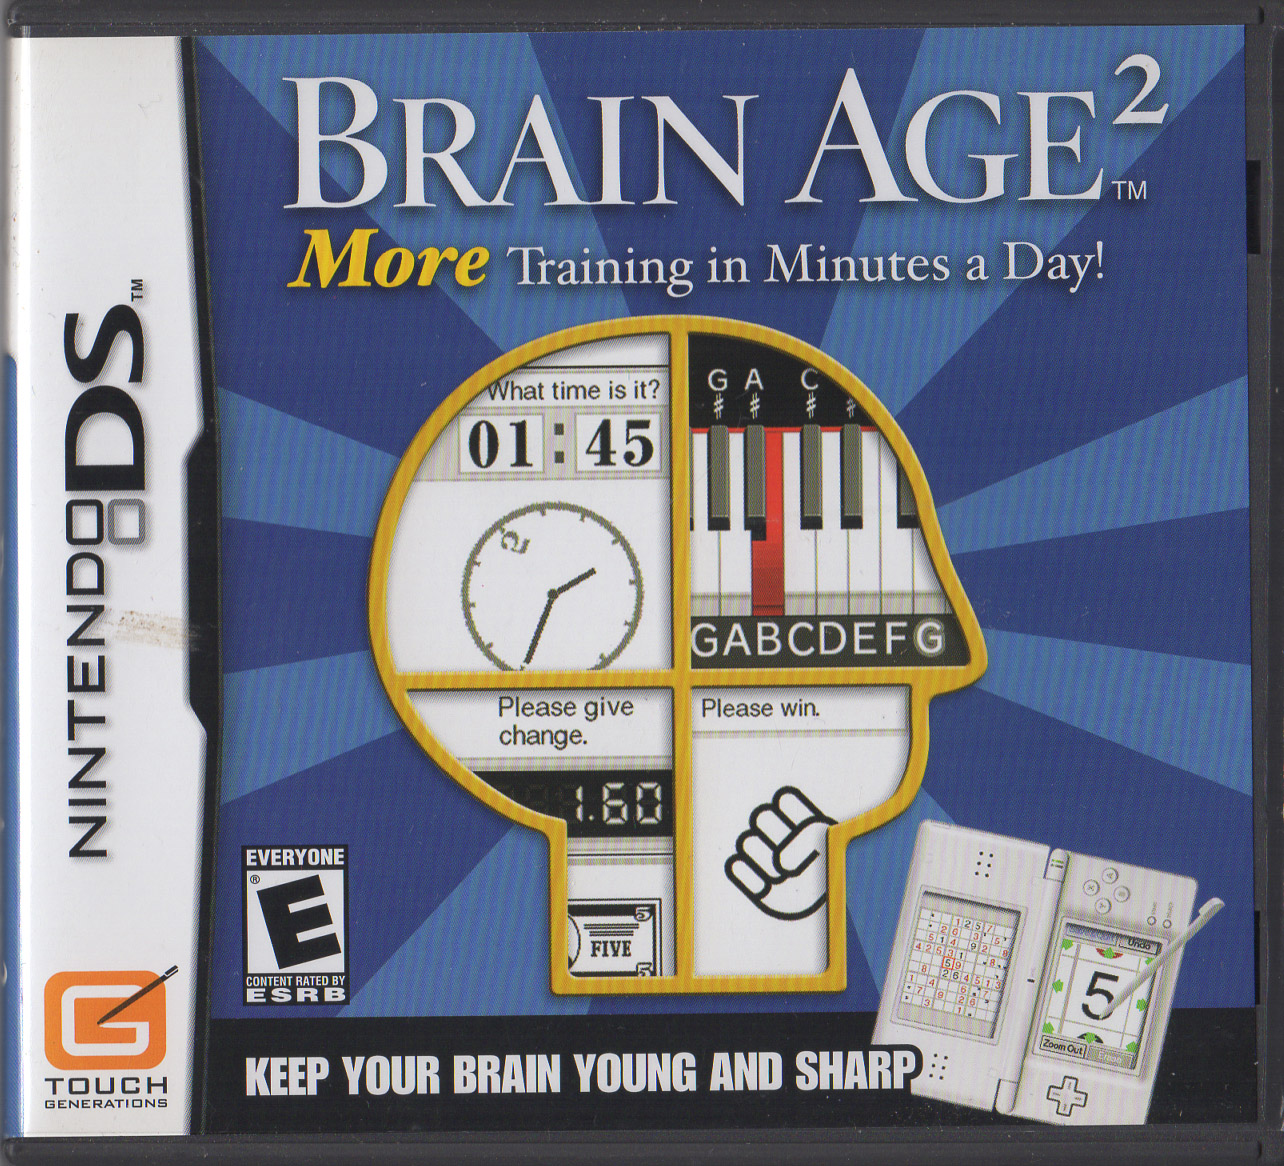 Brain age